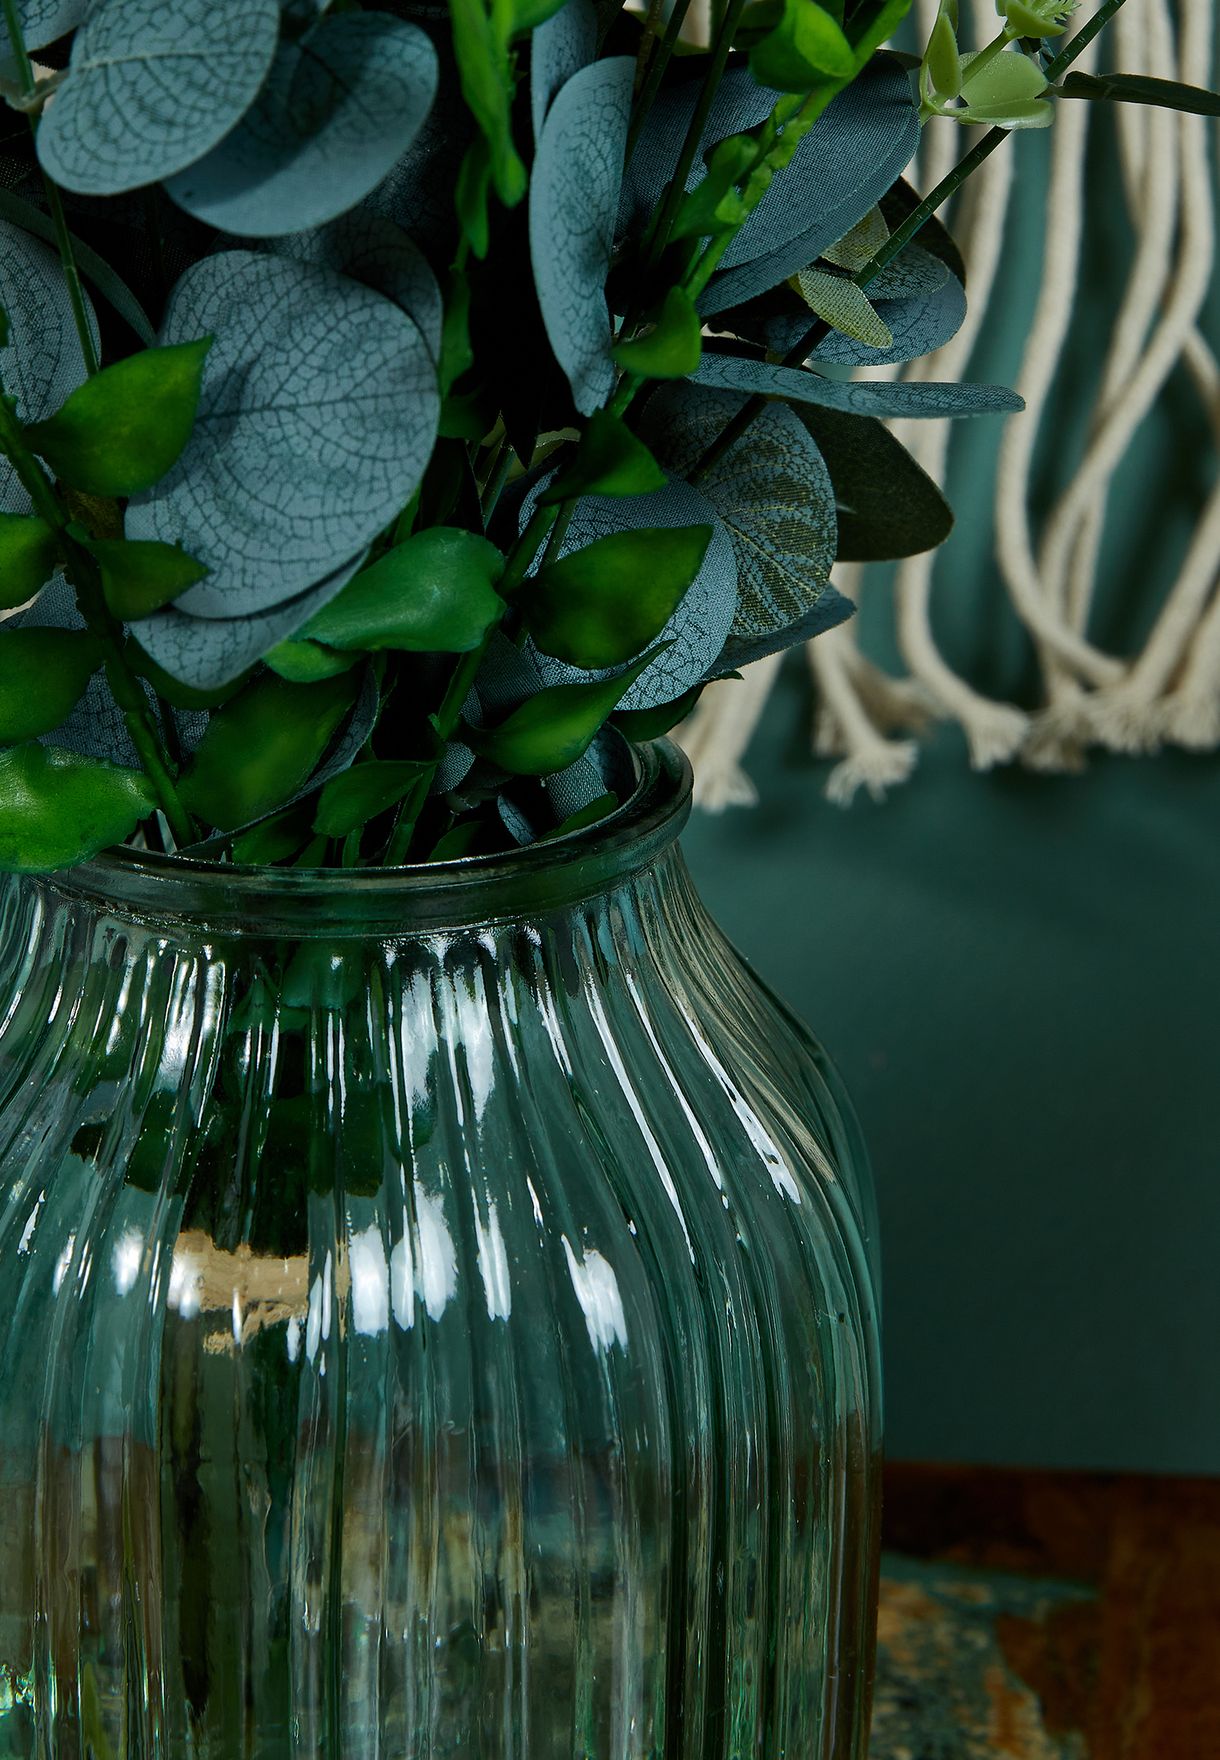 Faux Ferns & Eucalyptus Stems in Glass Vase